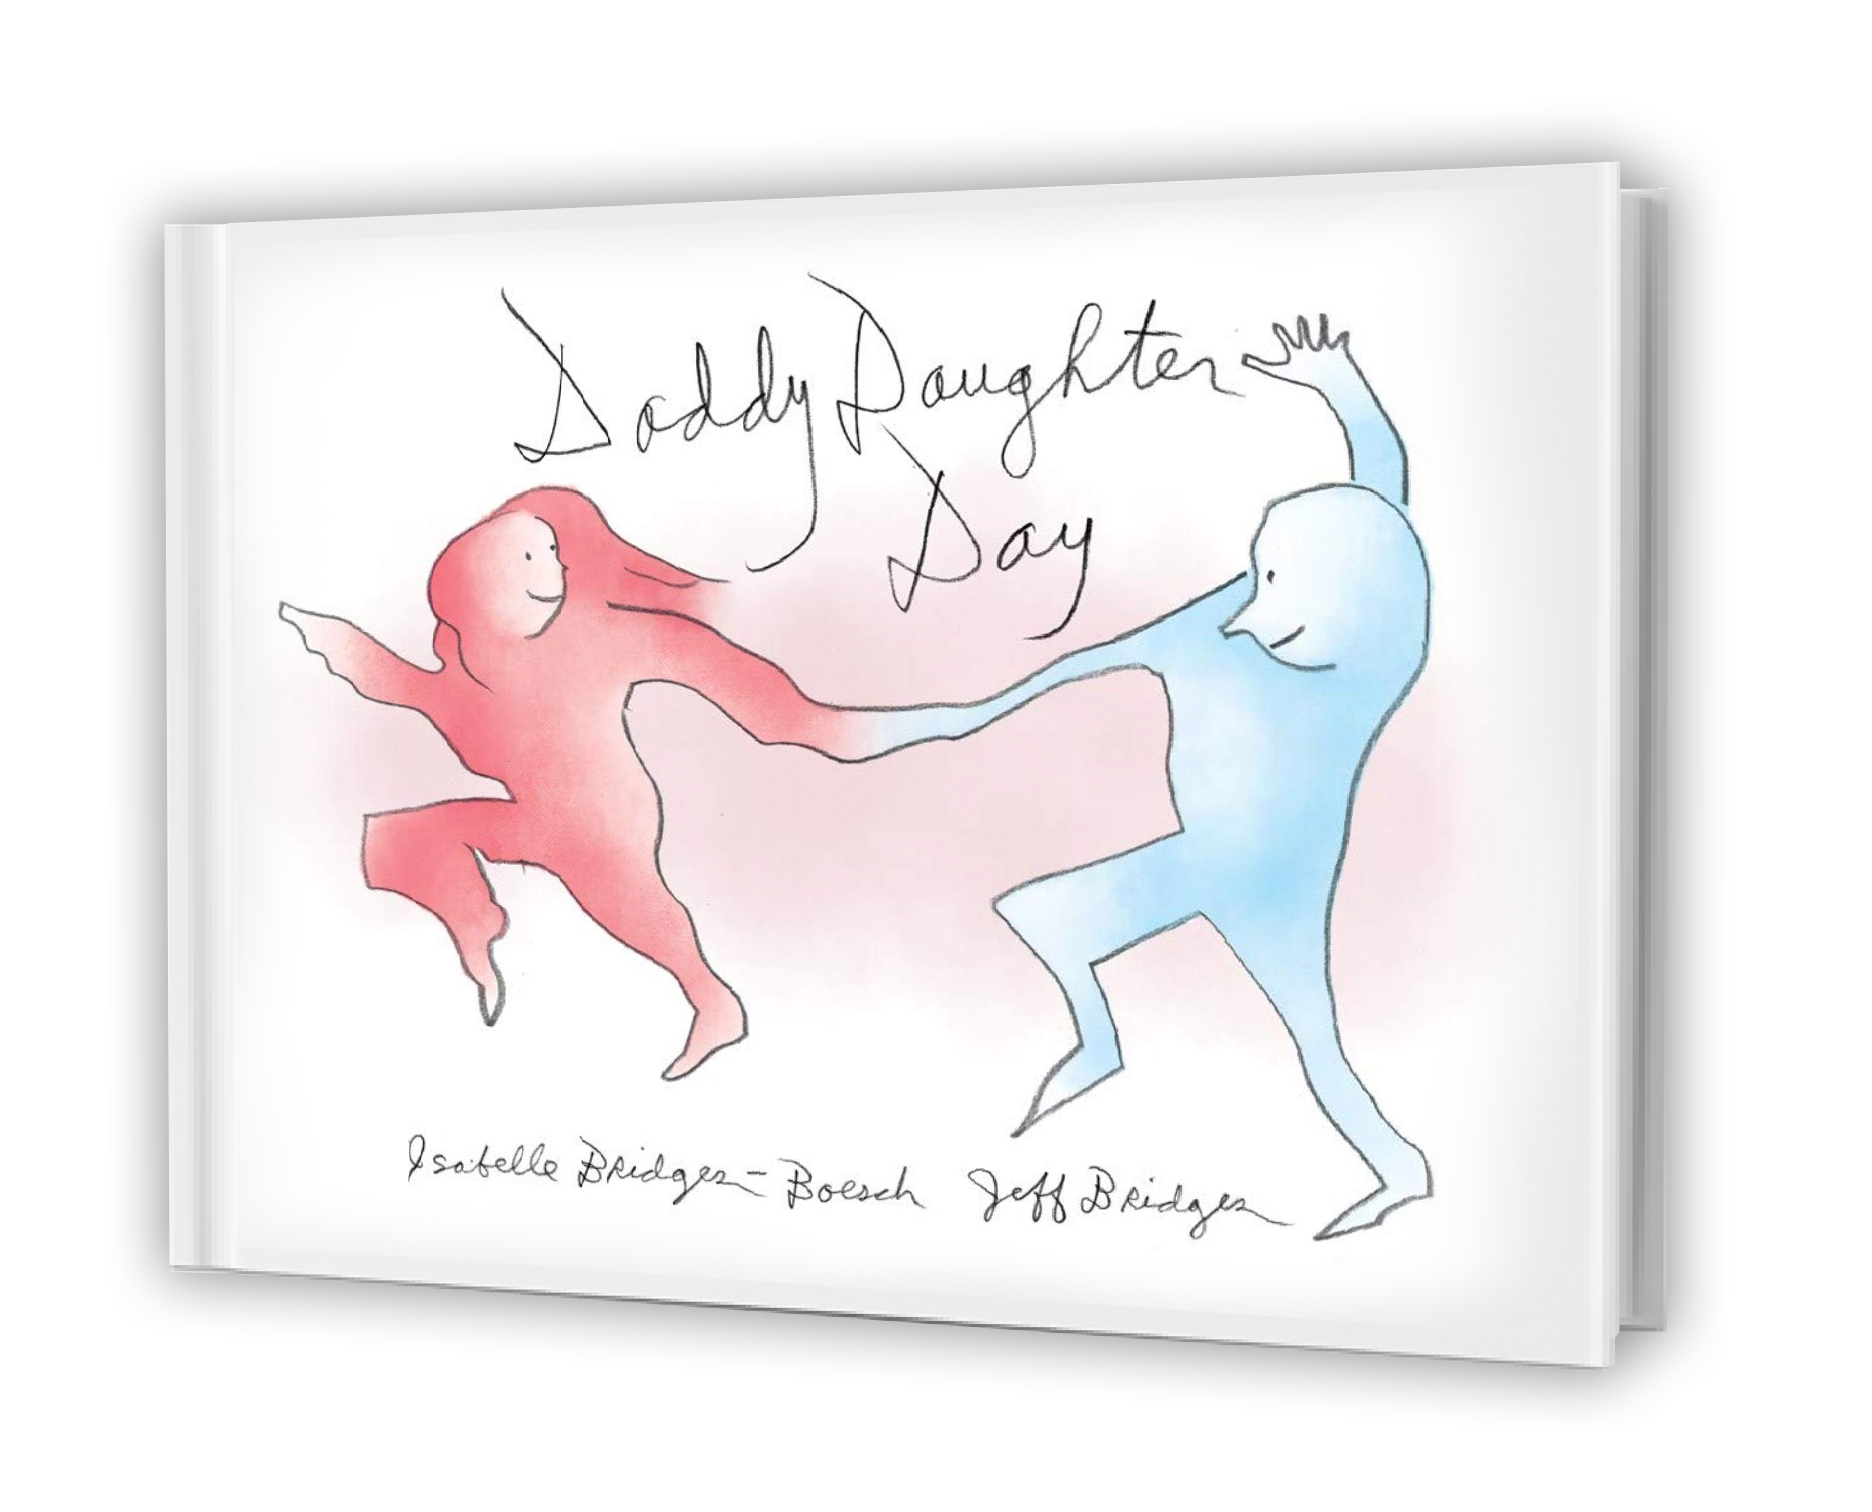 Jeff Bridges and Isabelle Bridges-Boesch's 'Daddy Daughter Day' - The Santa  Barbara Independent